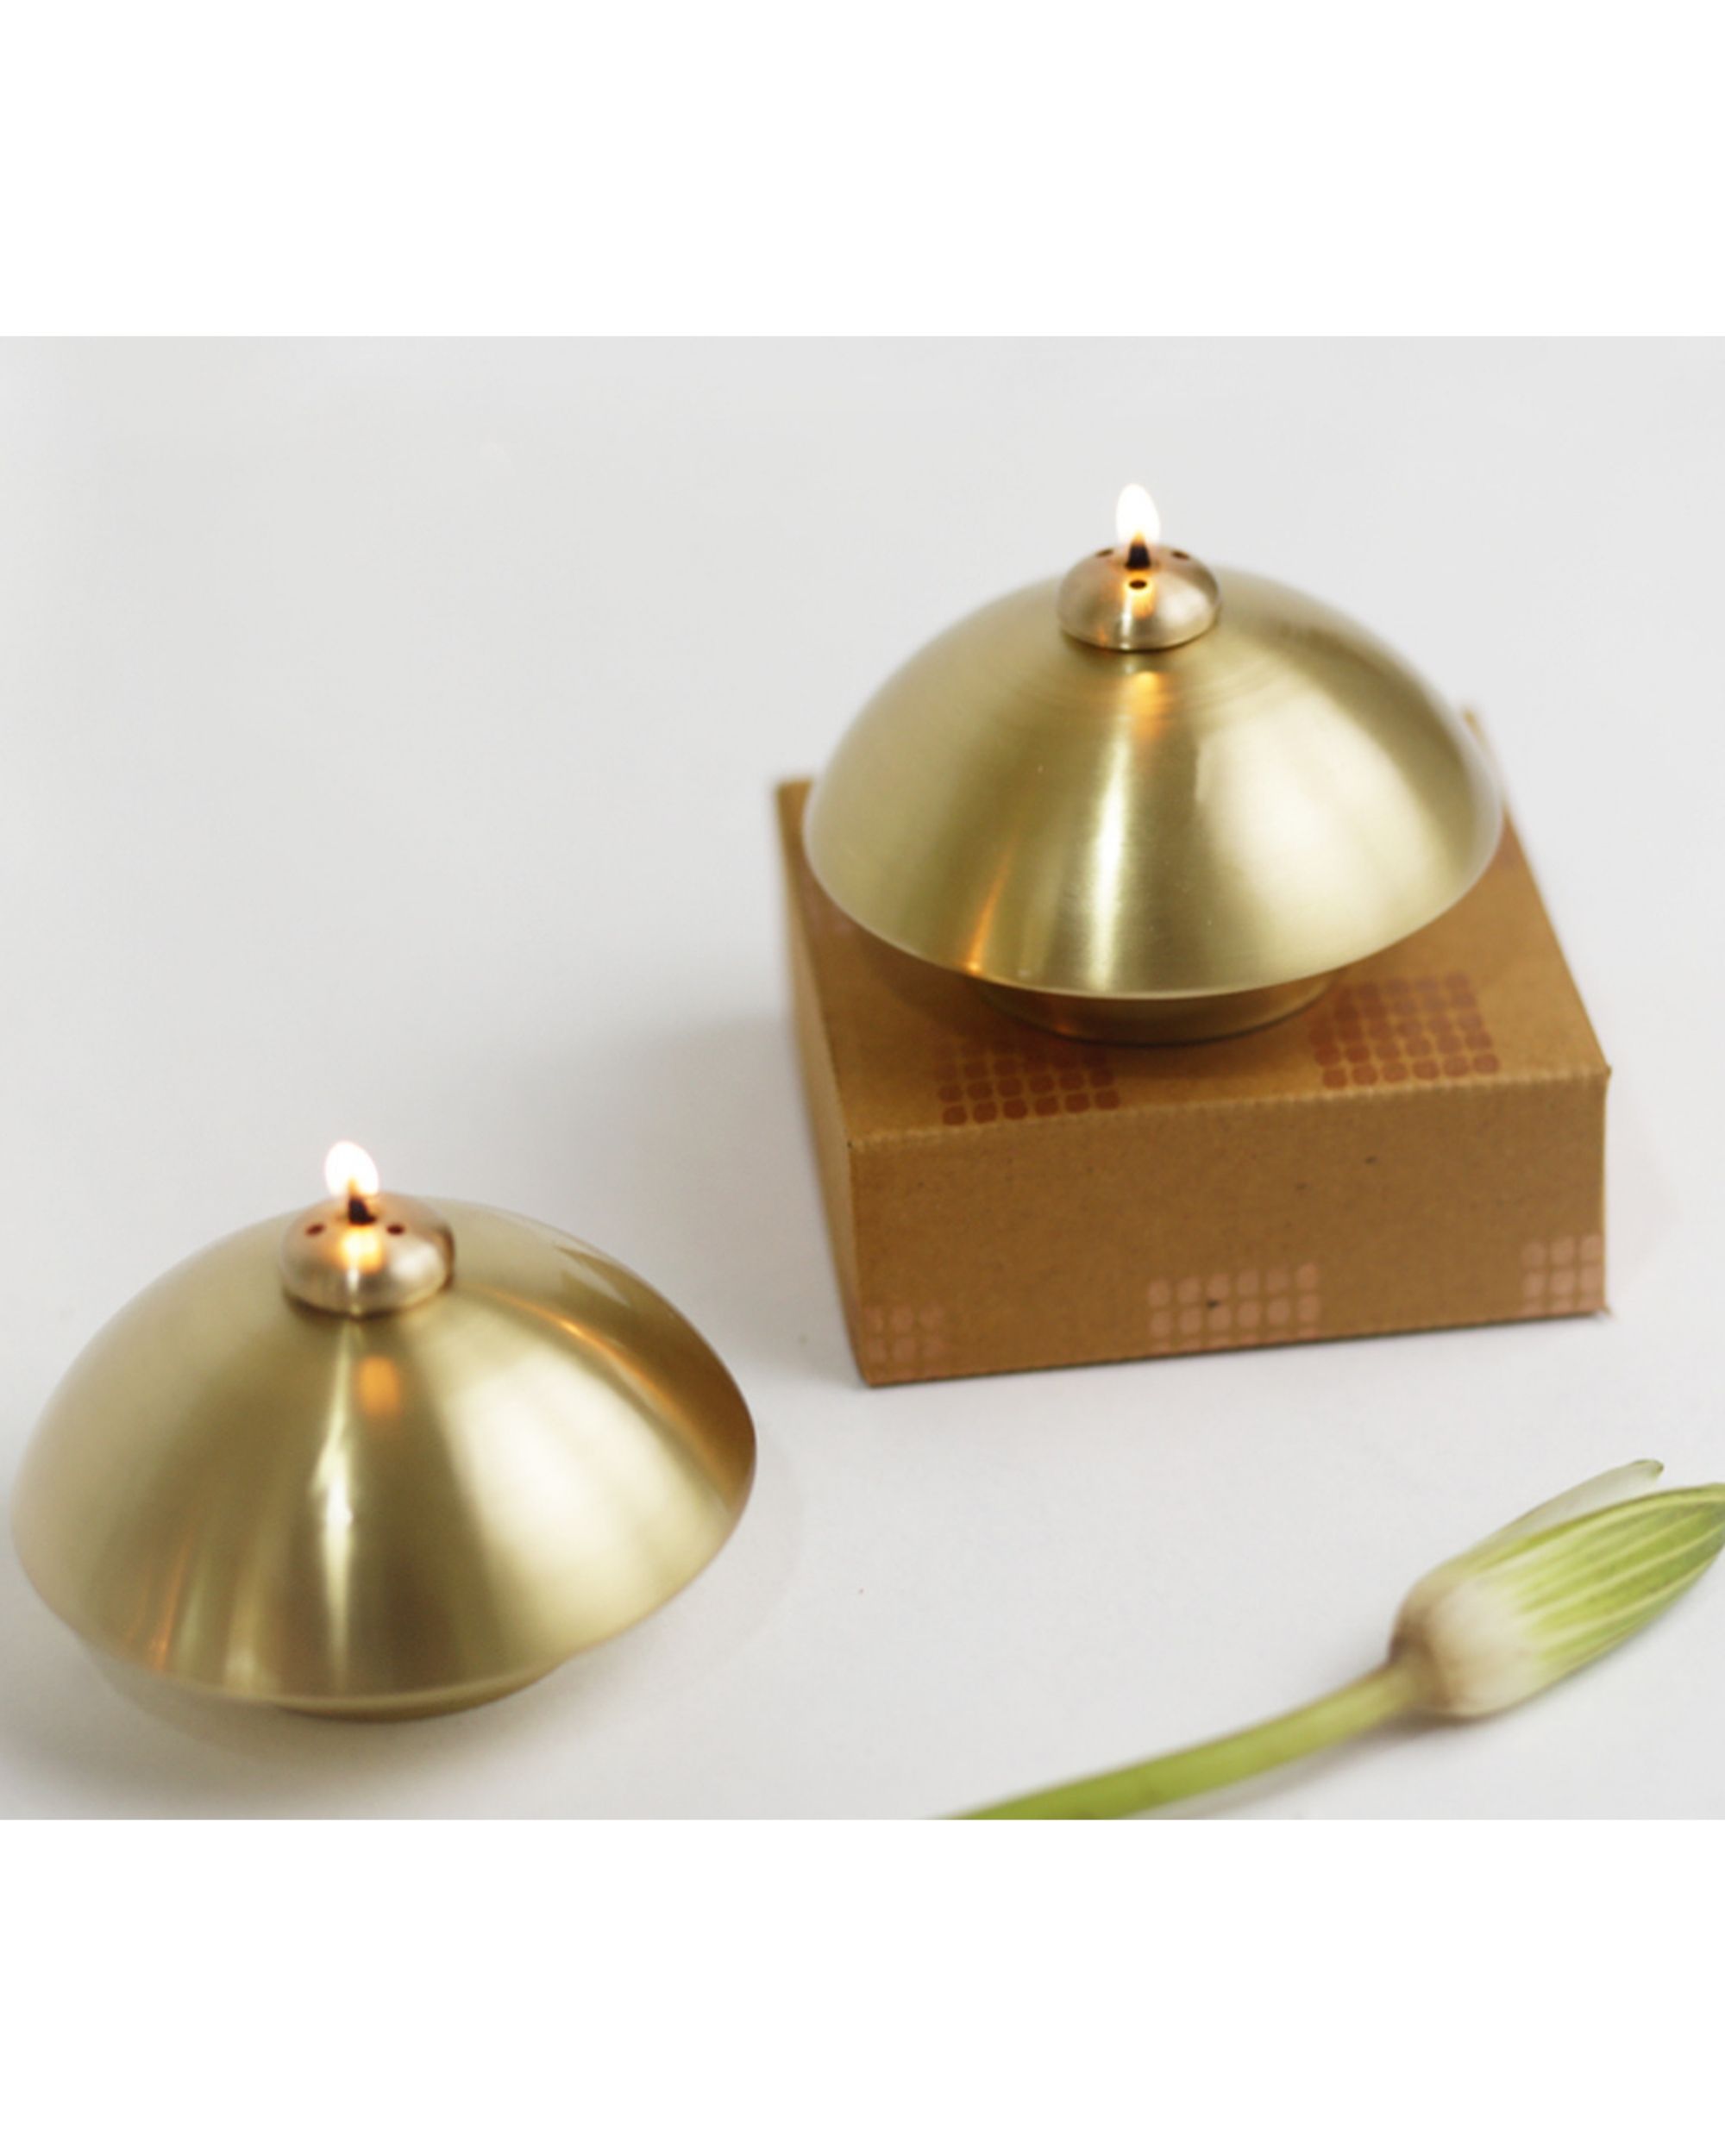 Sanchi brass oil lamp